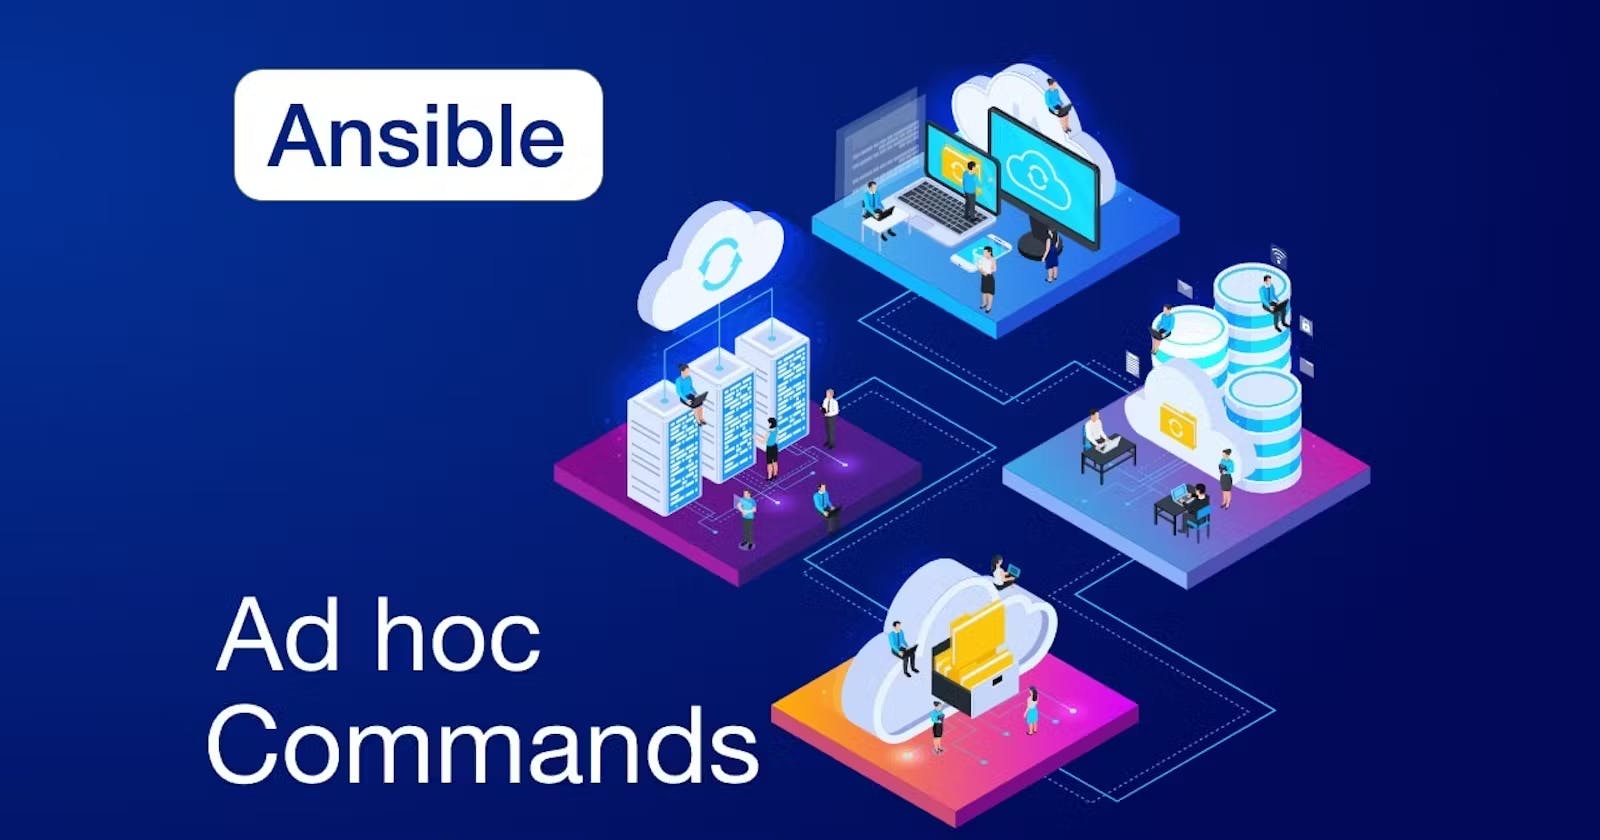 Understanding Ad-hoc commands in Ansible